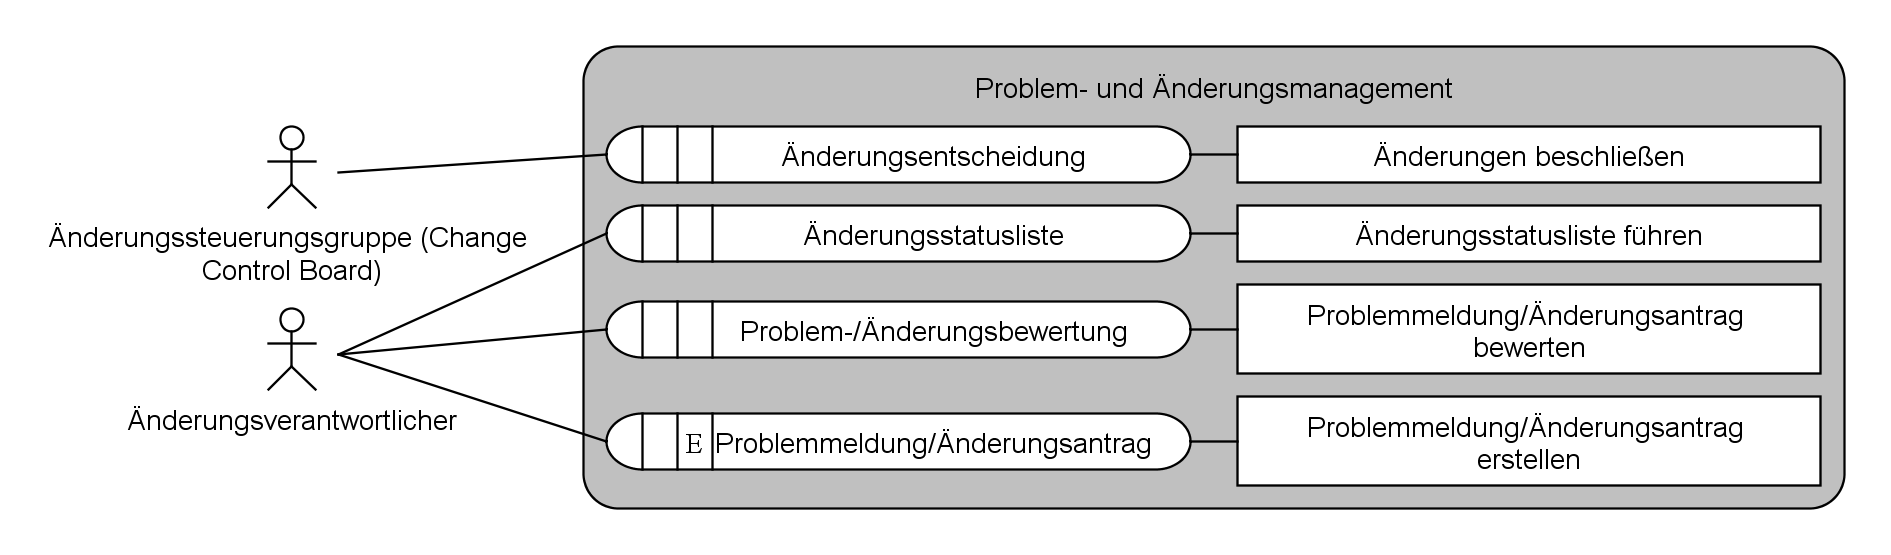 Projektabschlussbericht, Projekthandbuch, Projektplan, Projektstatusbericht Projektleiter: Produktbibliothek Gewählt bei Immer (V-Modell-Kern) F.3.